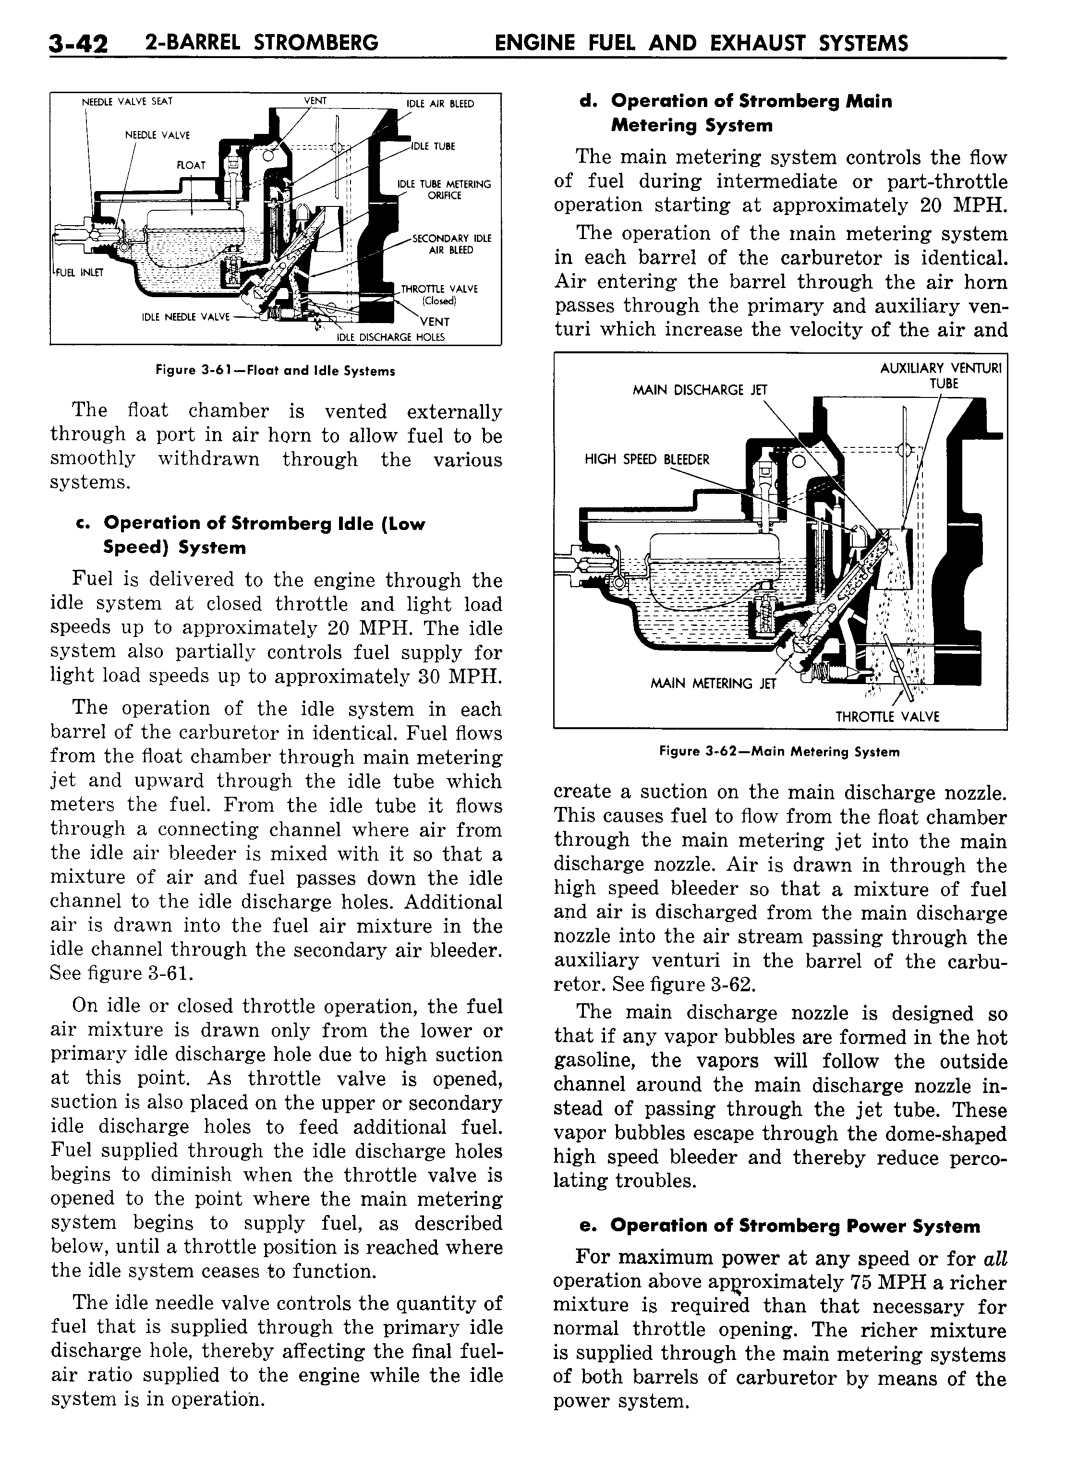 n_04 1957 Buick Shop Manual - Engine Fuel & Exhaust-042-042.jpg